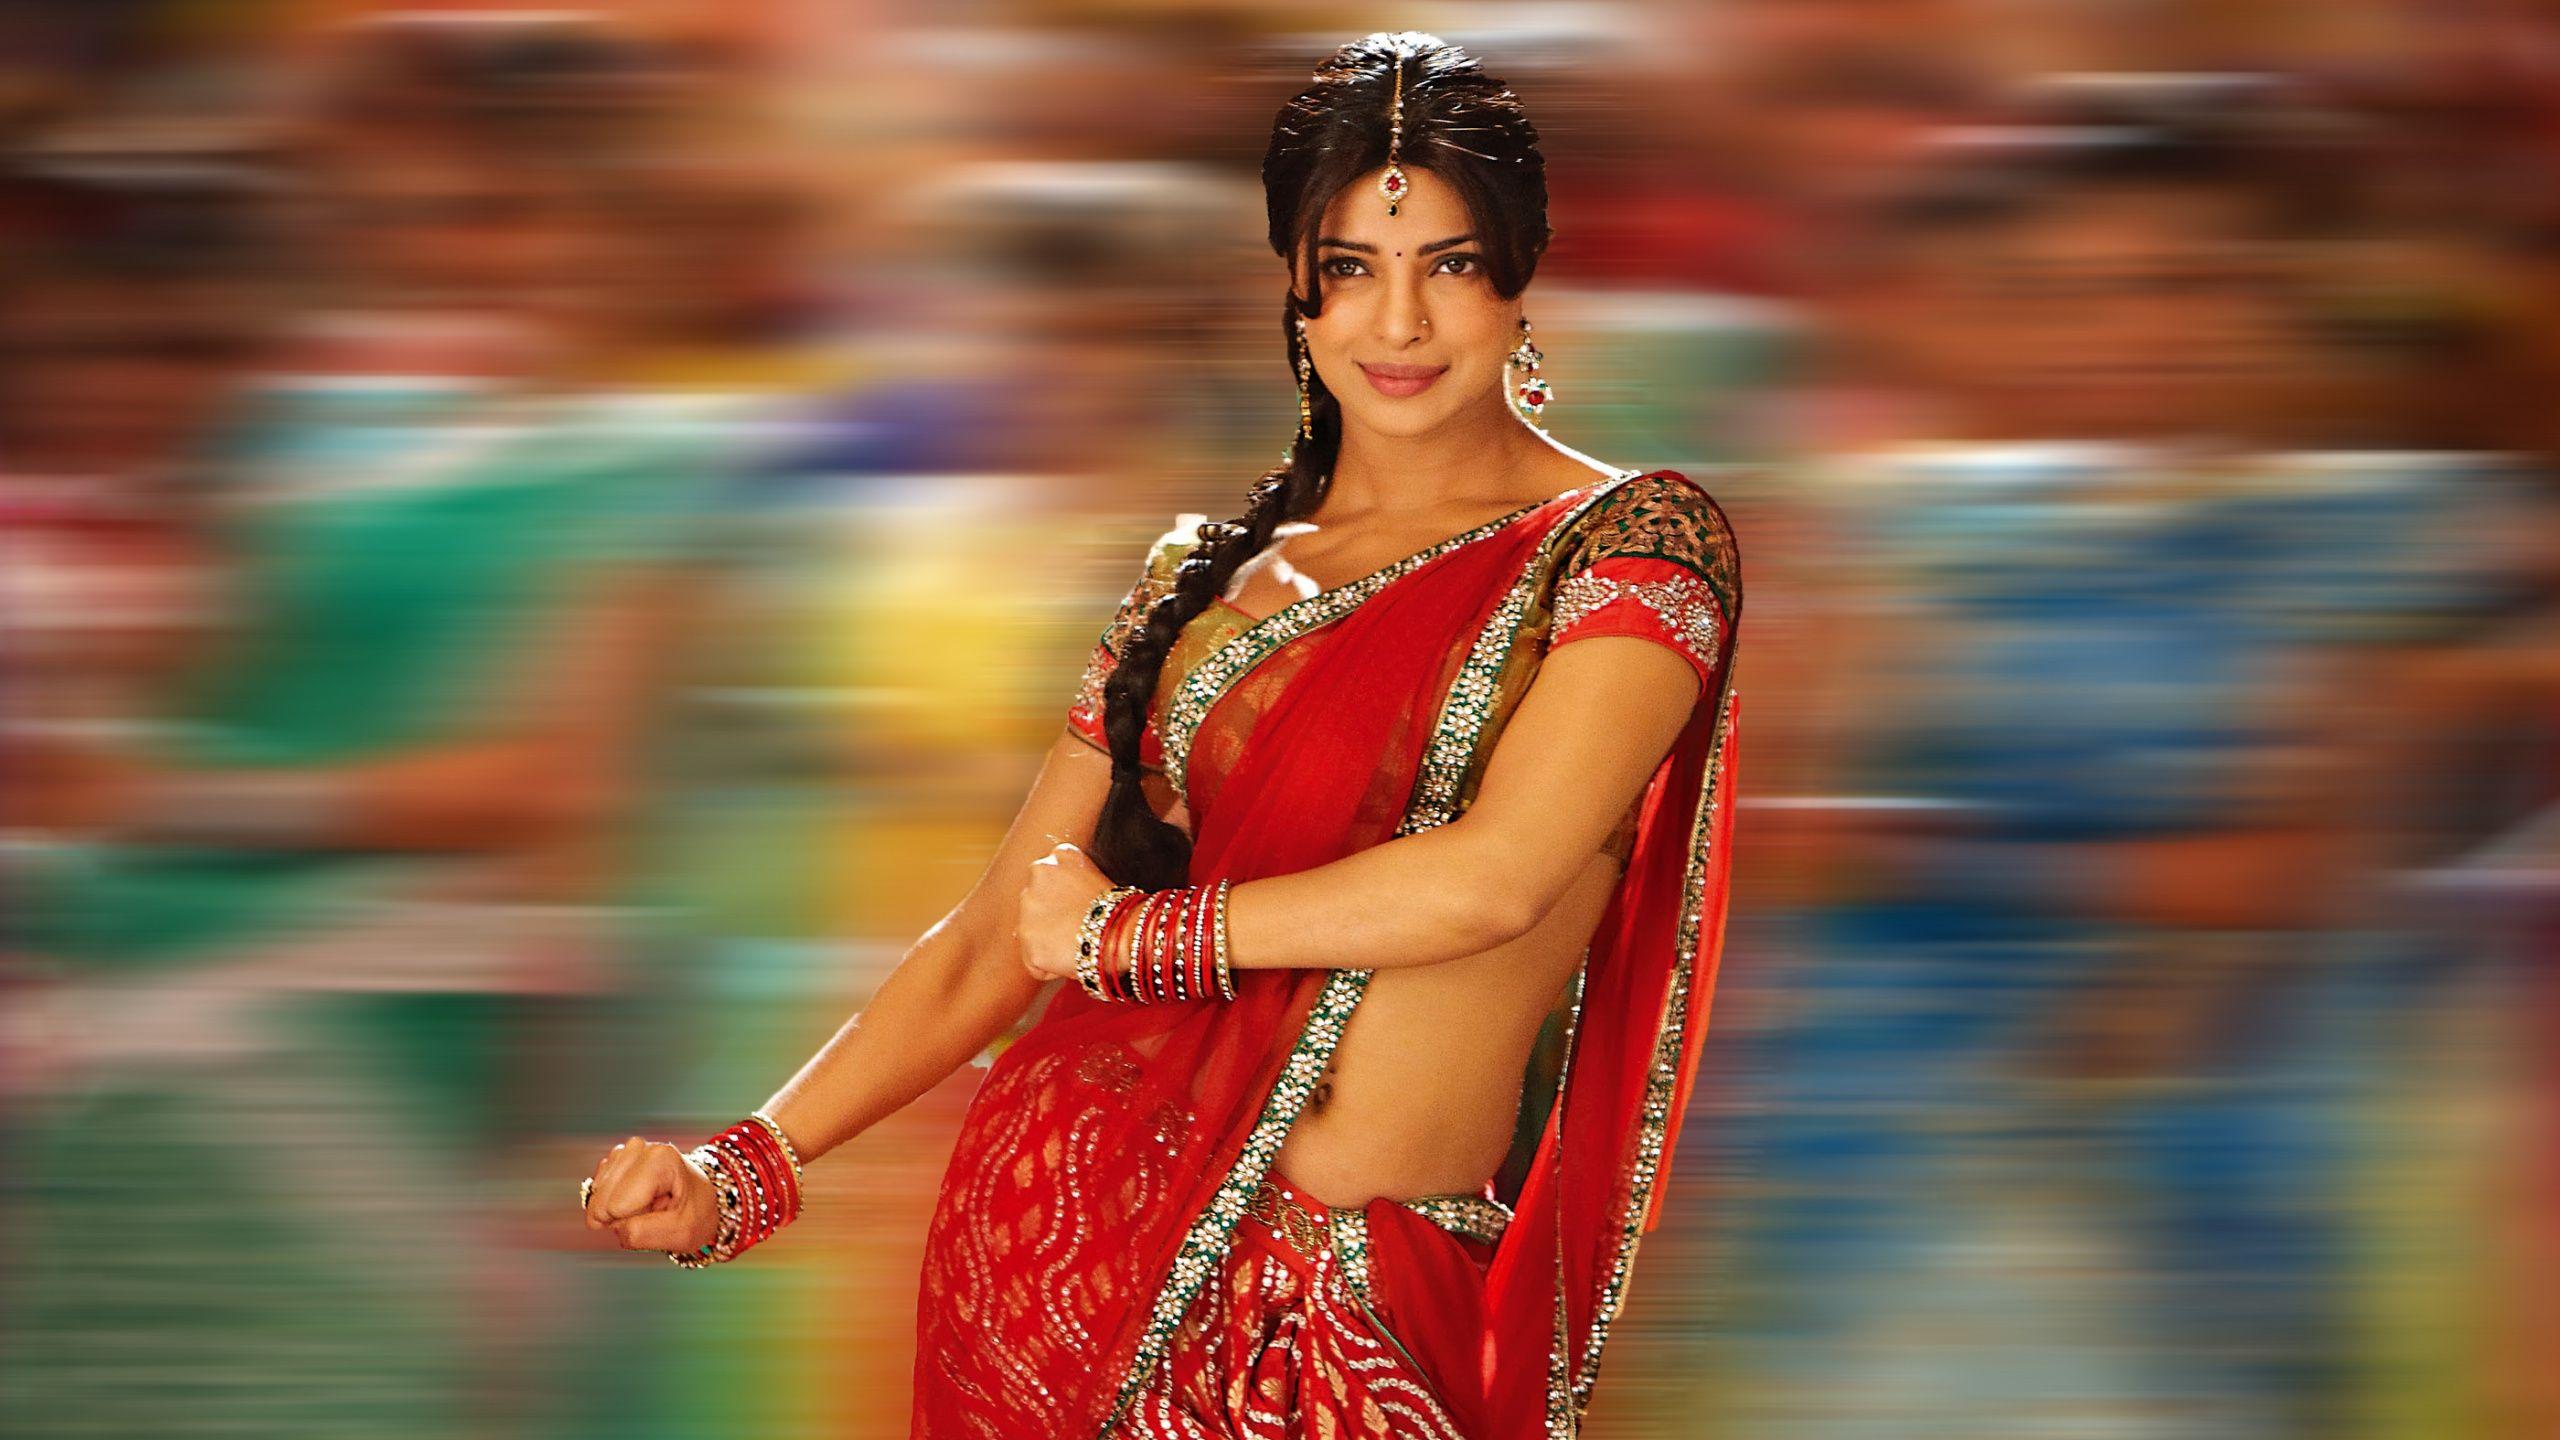 Priyanka Chopra Full HD Wallpaper and Background Imagex1440